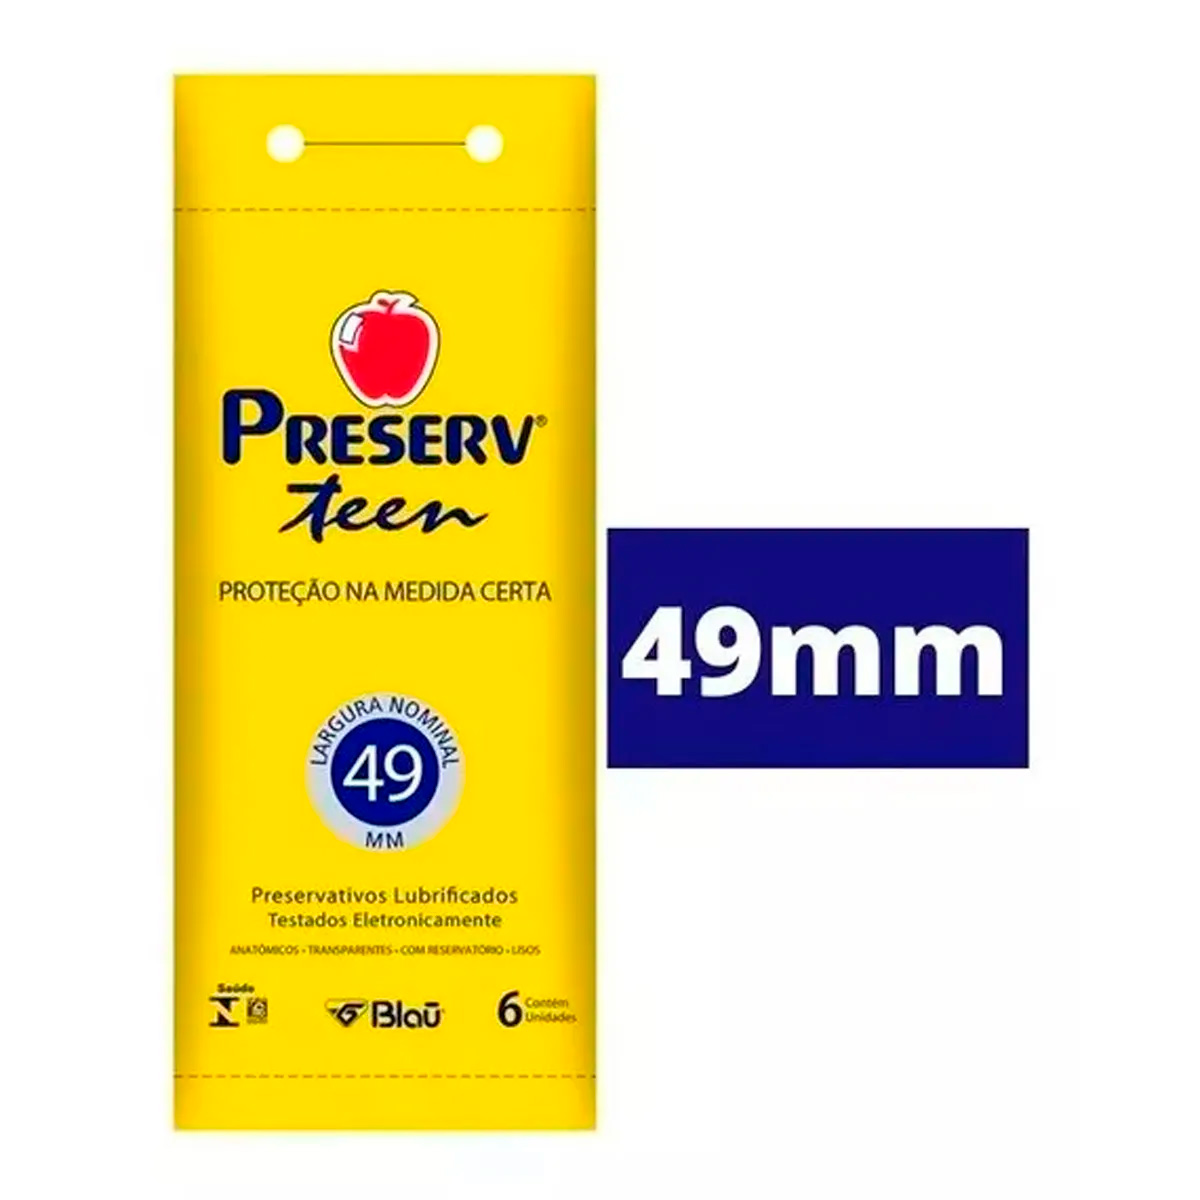 Preservativo Preserv Teen 6 Unidades - Kit com 6